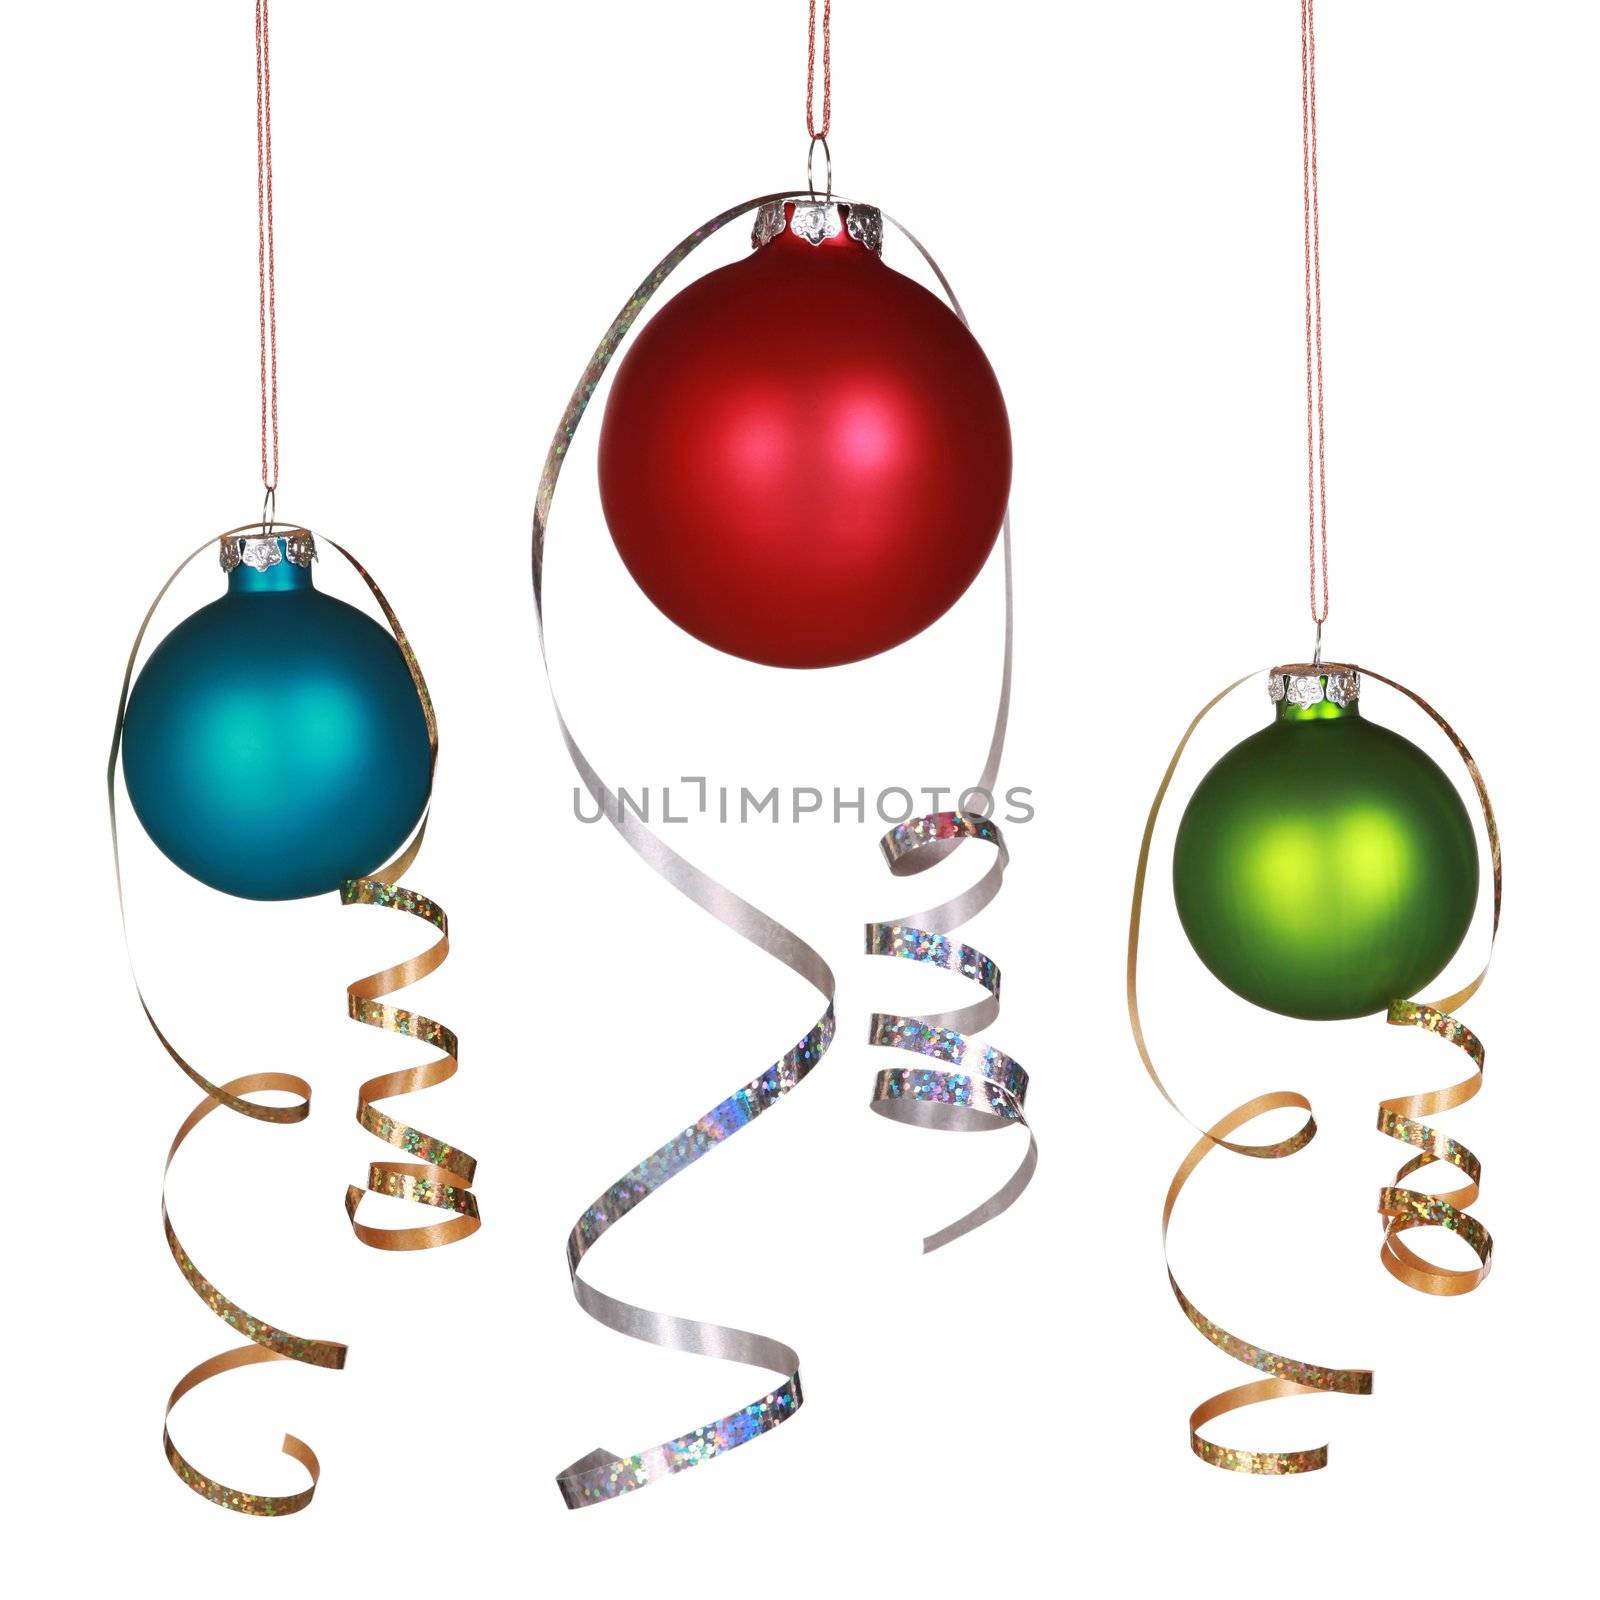 Three Christmas ornaments by jarenwicklund